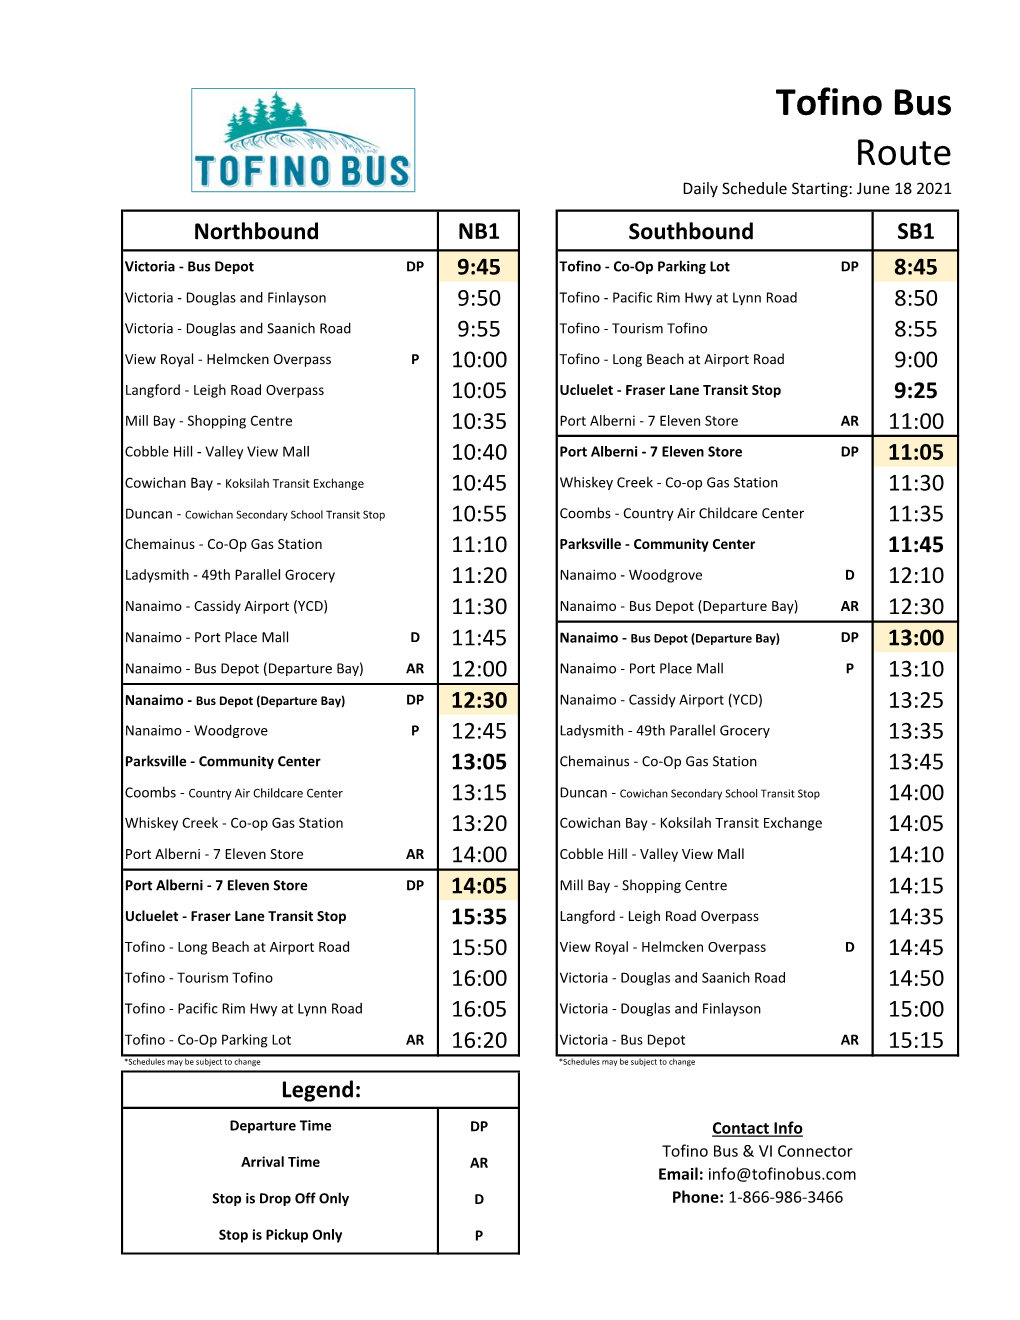 Tofino Bus Schedule